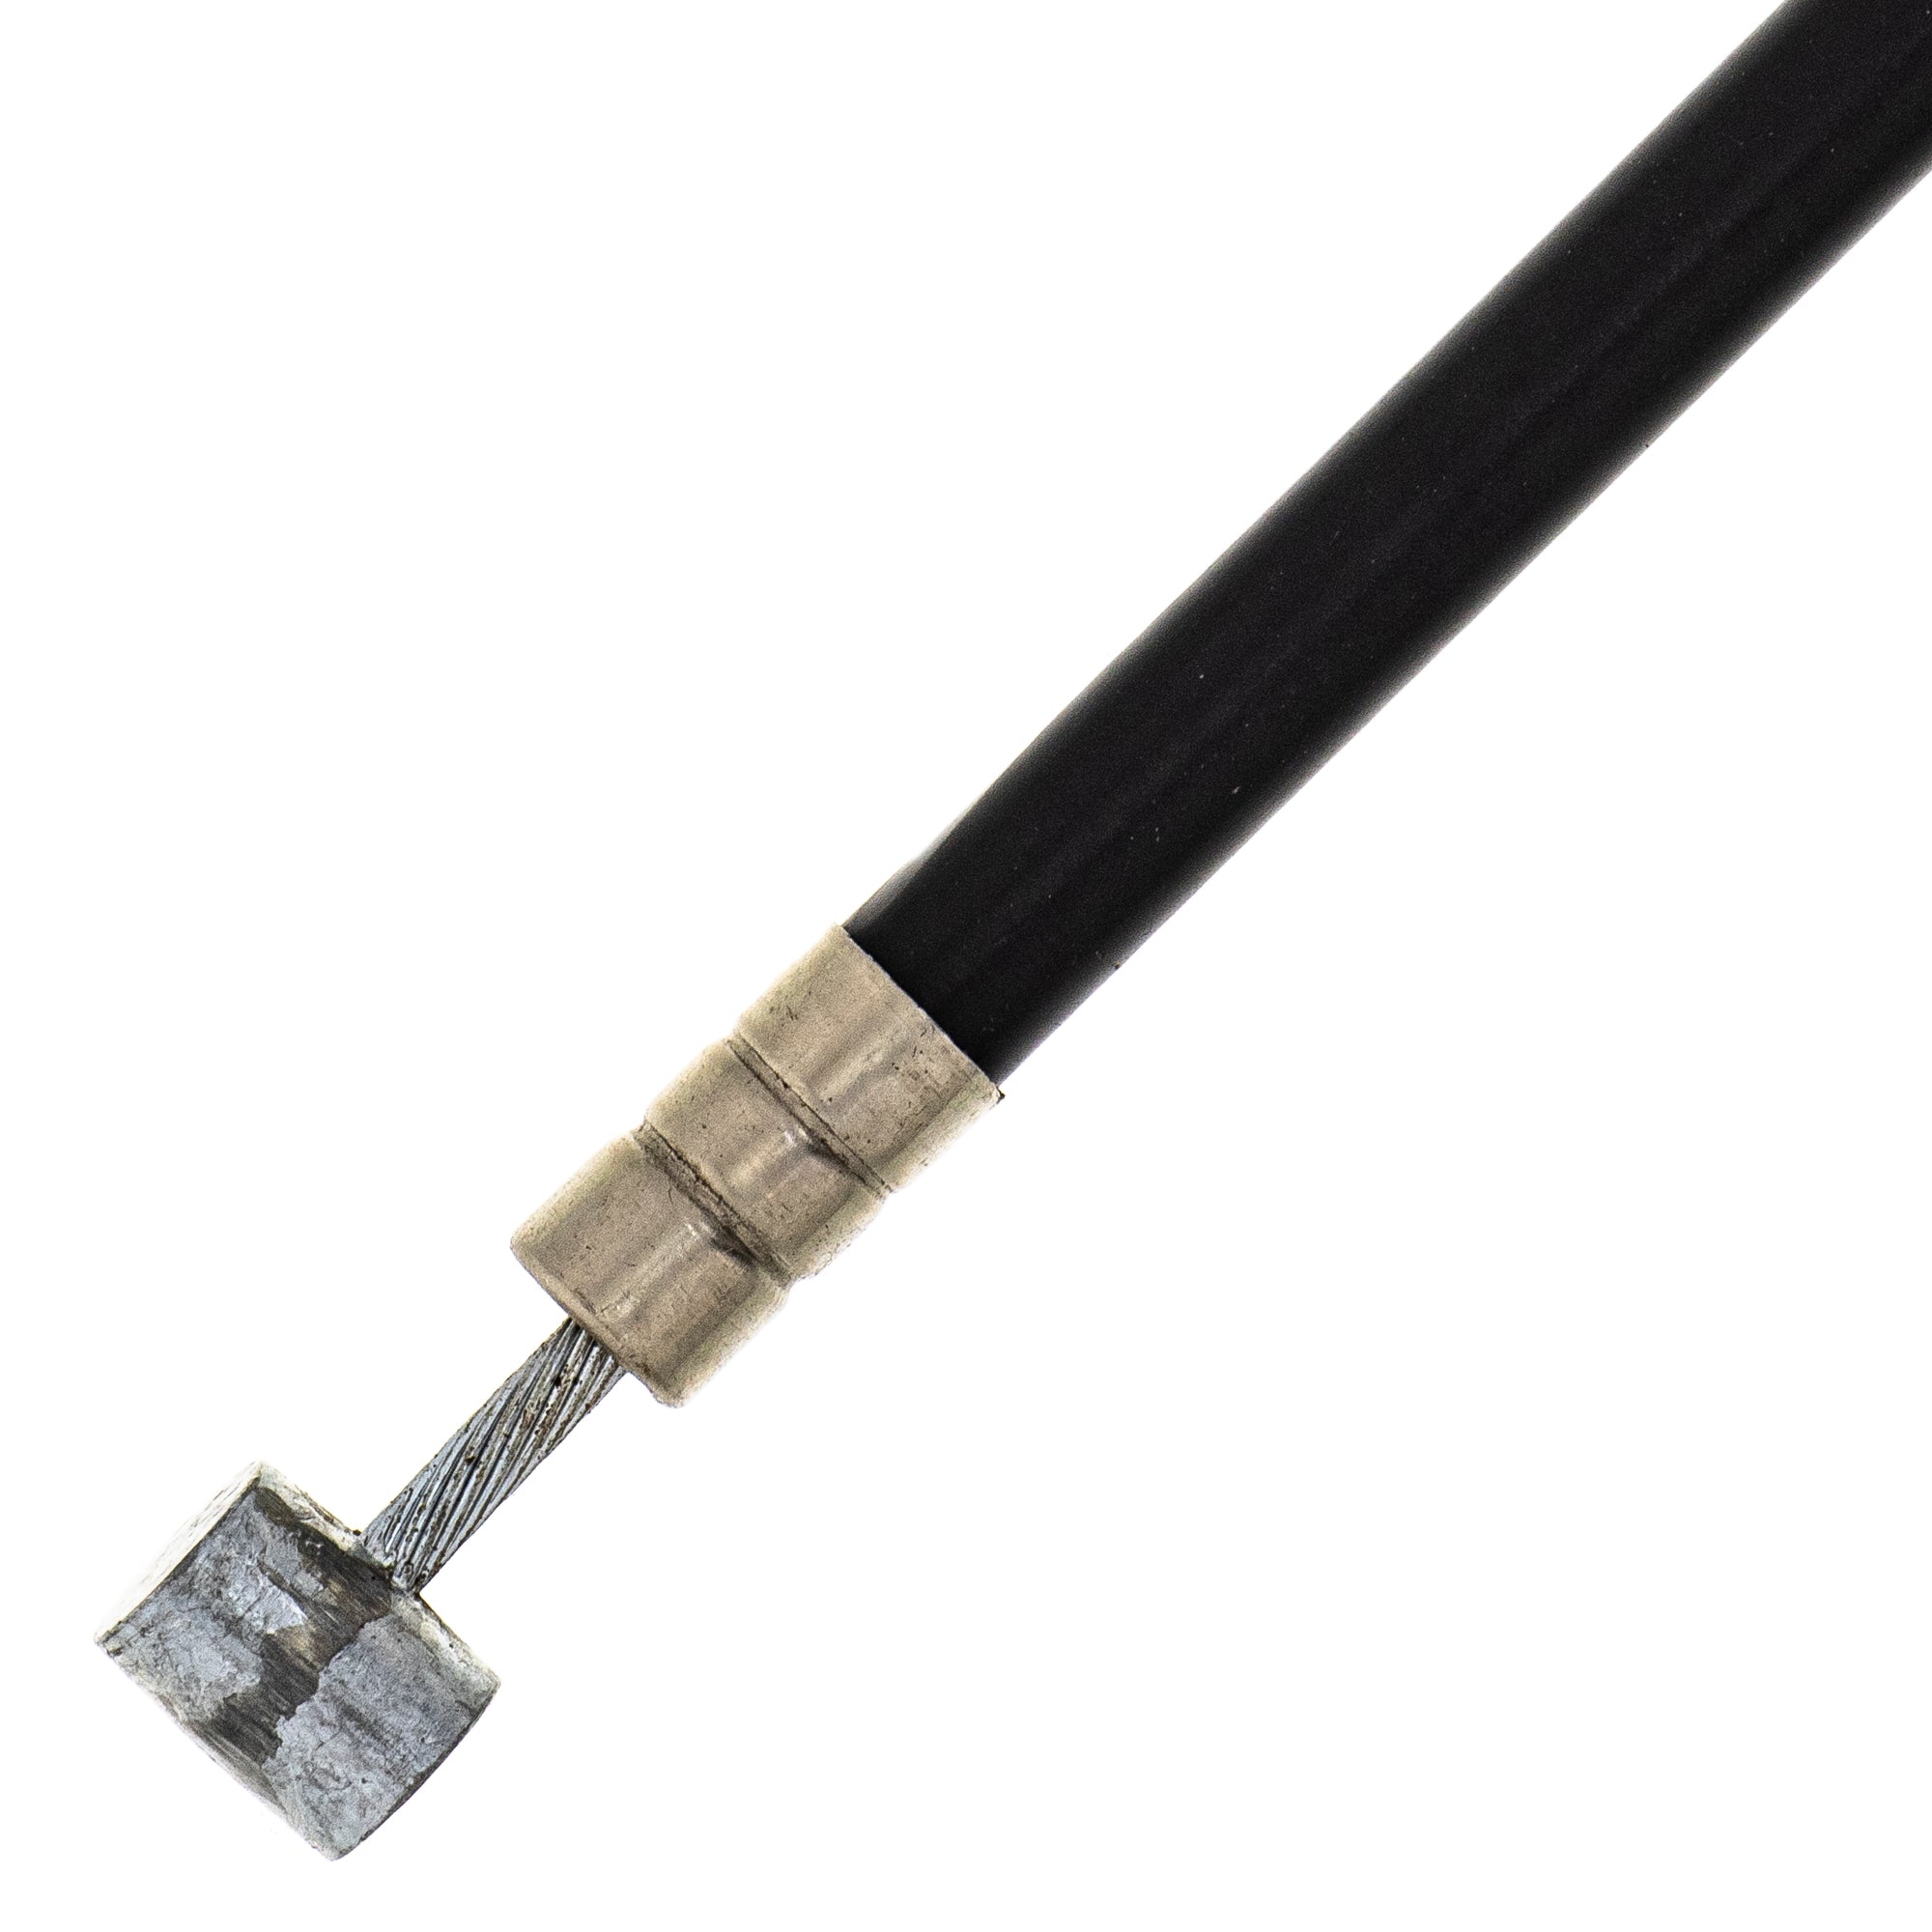 NICHE Clutch Cable 3HE-26335-01-00 1WG-26335-00-00